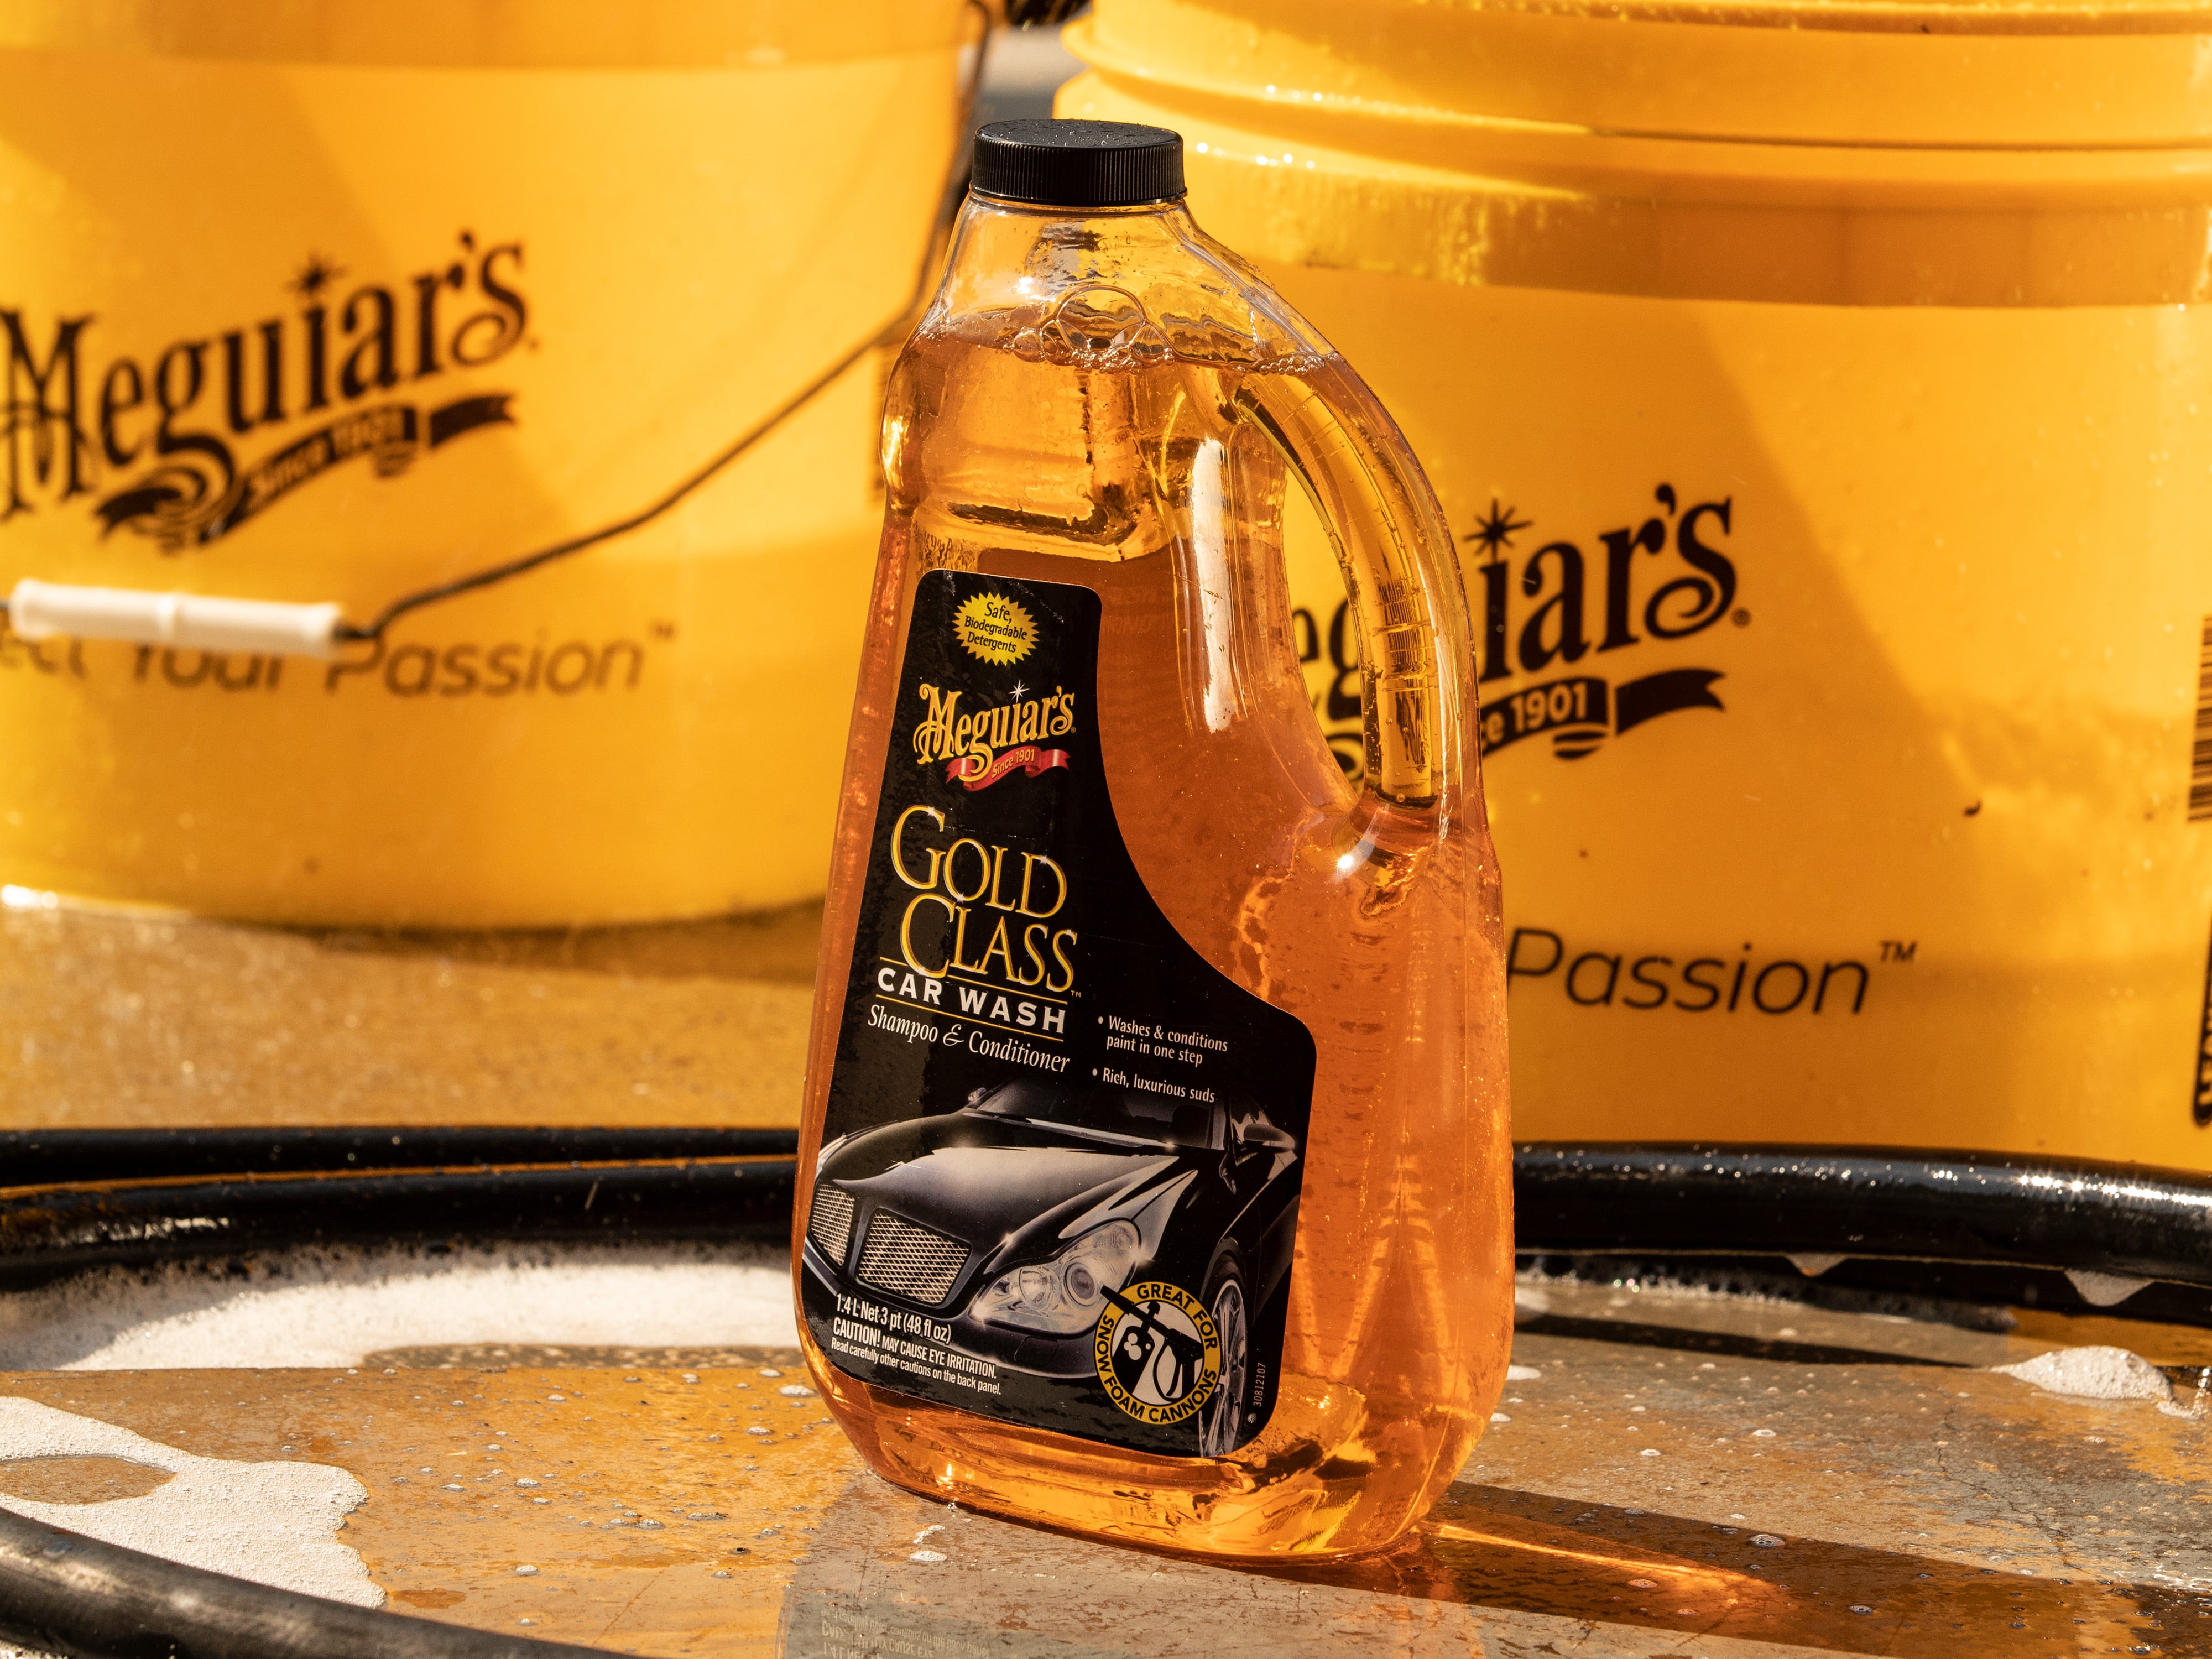 Meguiar's® Gold Class™ Car Wash Shampoo & Conditioner, 64 oz.